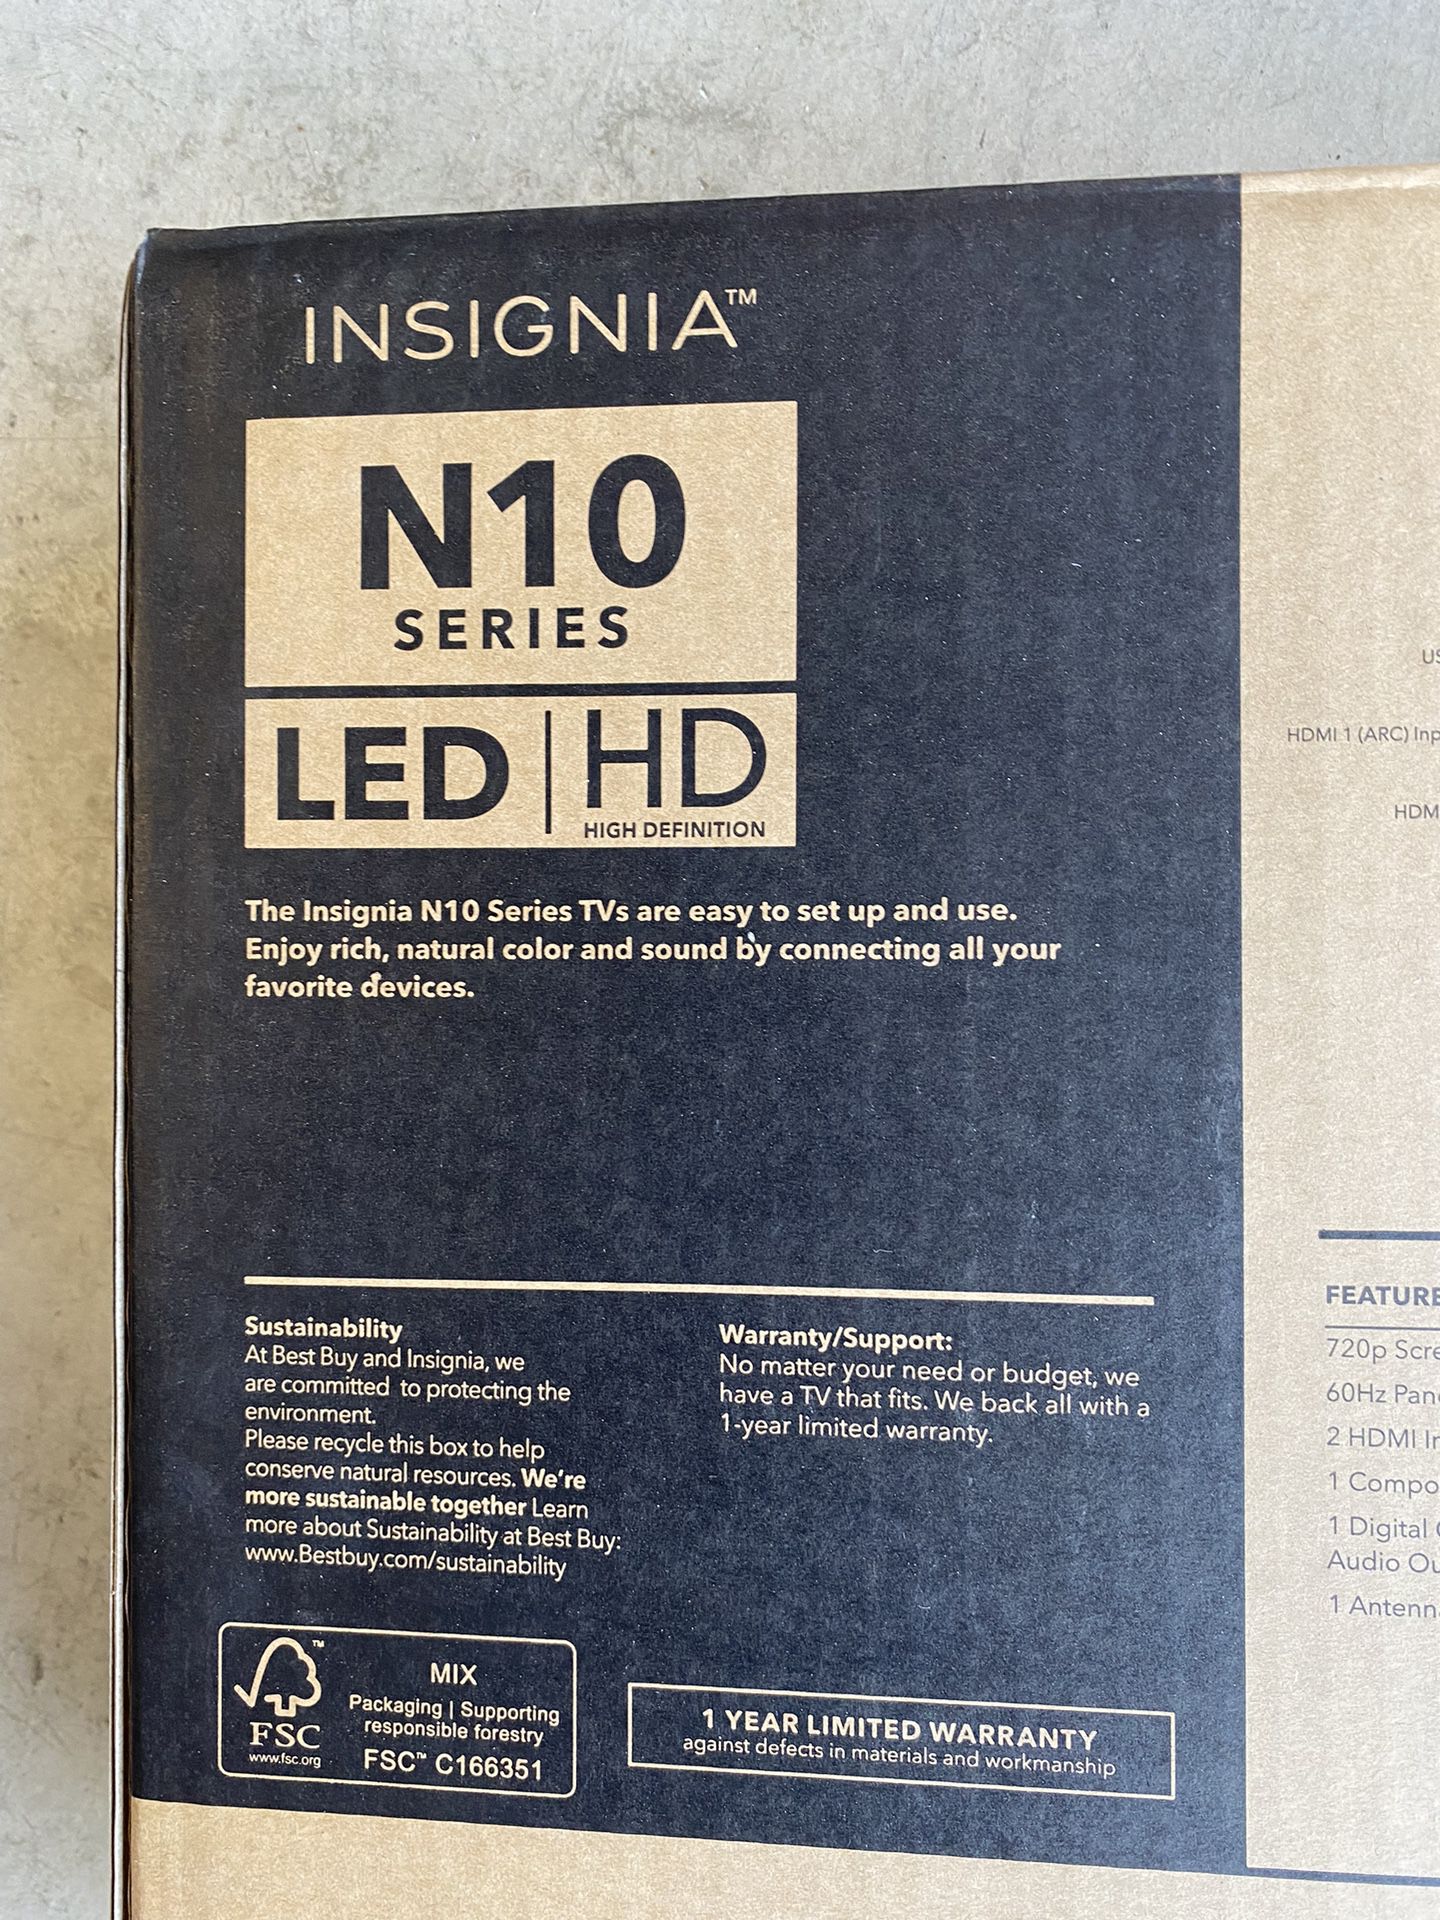 Insignia LED HD 24” TV New In Box